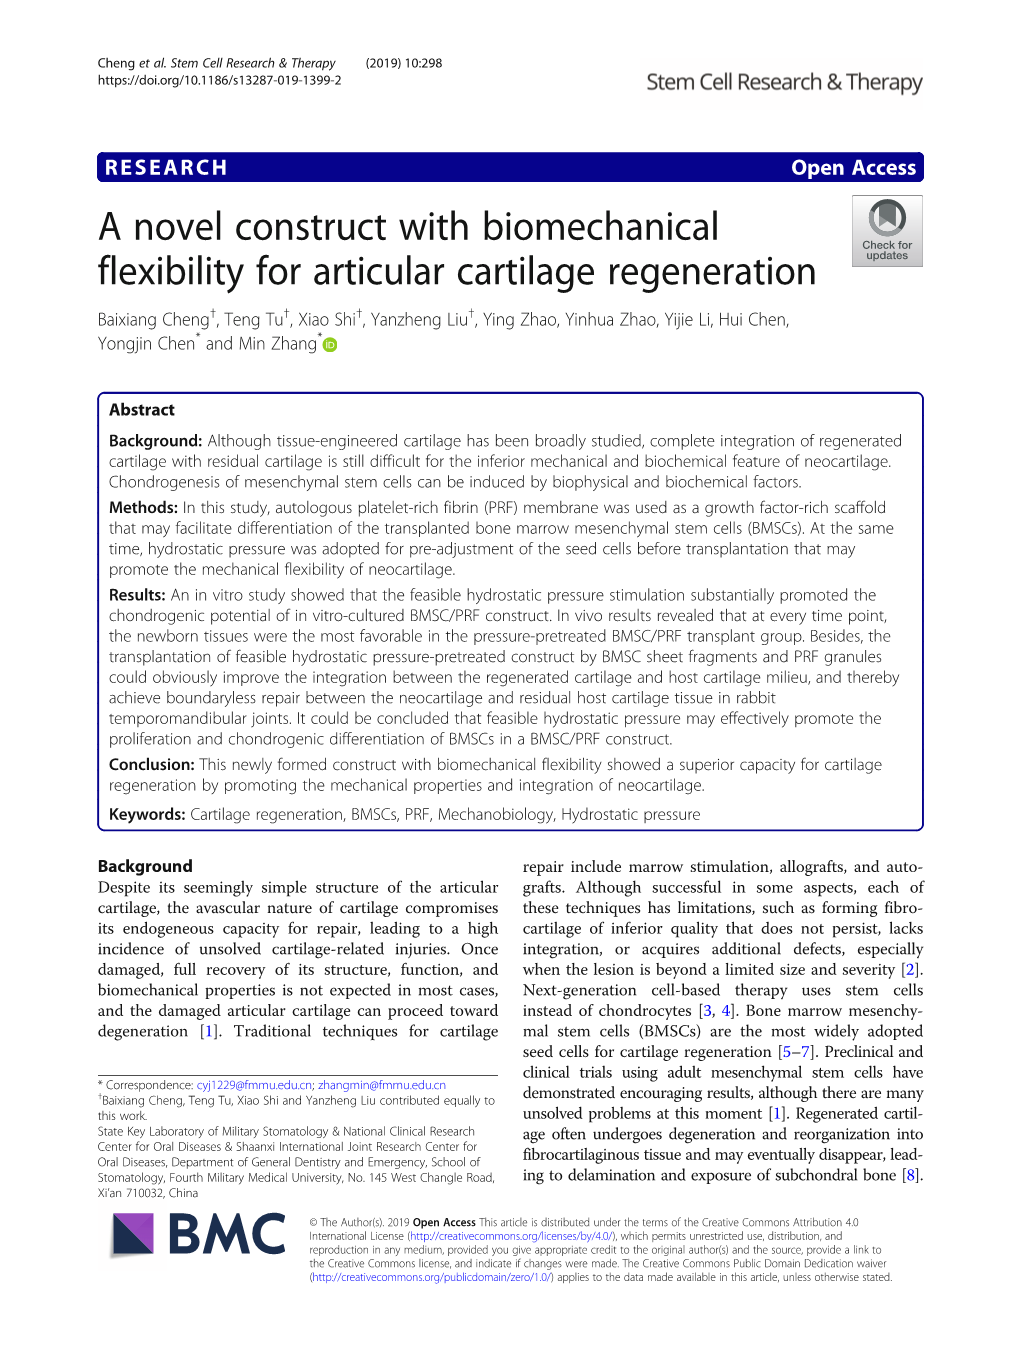 A Novel Construct with Biomechanical Flexibility for Articular Cartilage Regeneration